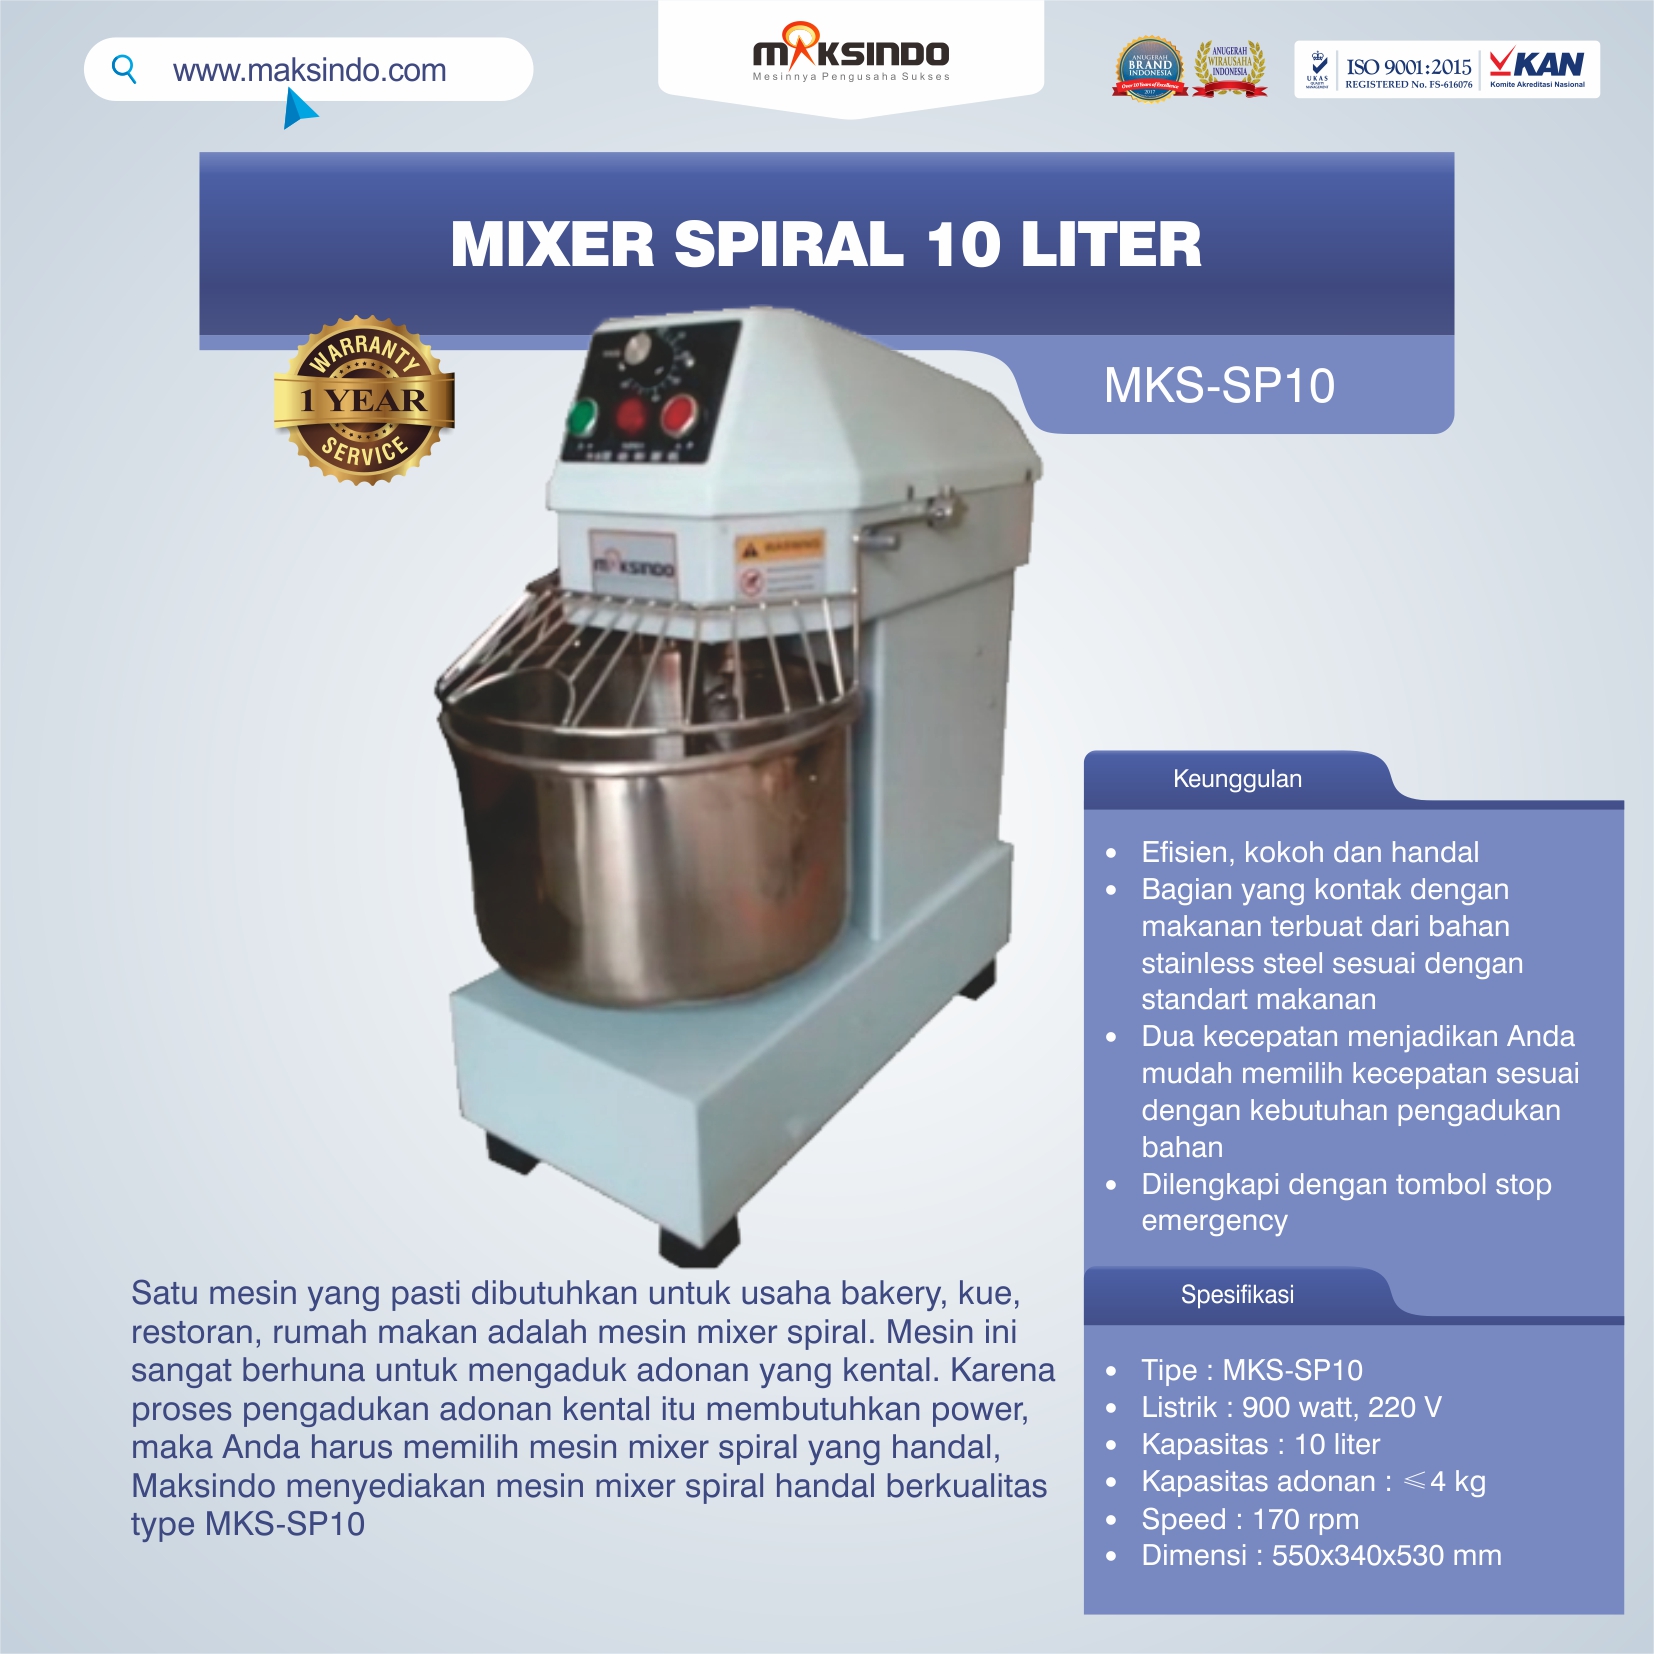 Jual Mixer Spiral 10 Liter (MKS-SP10) di Malang